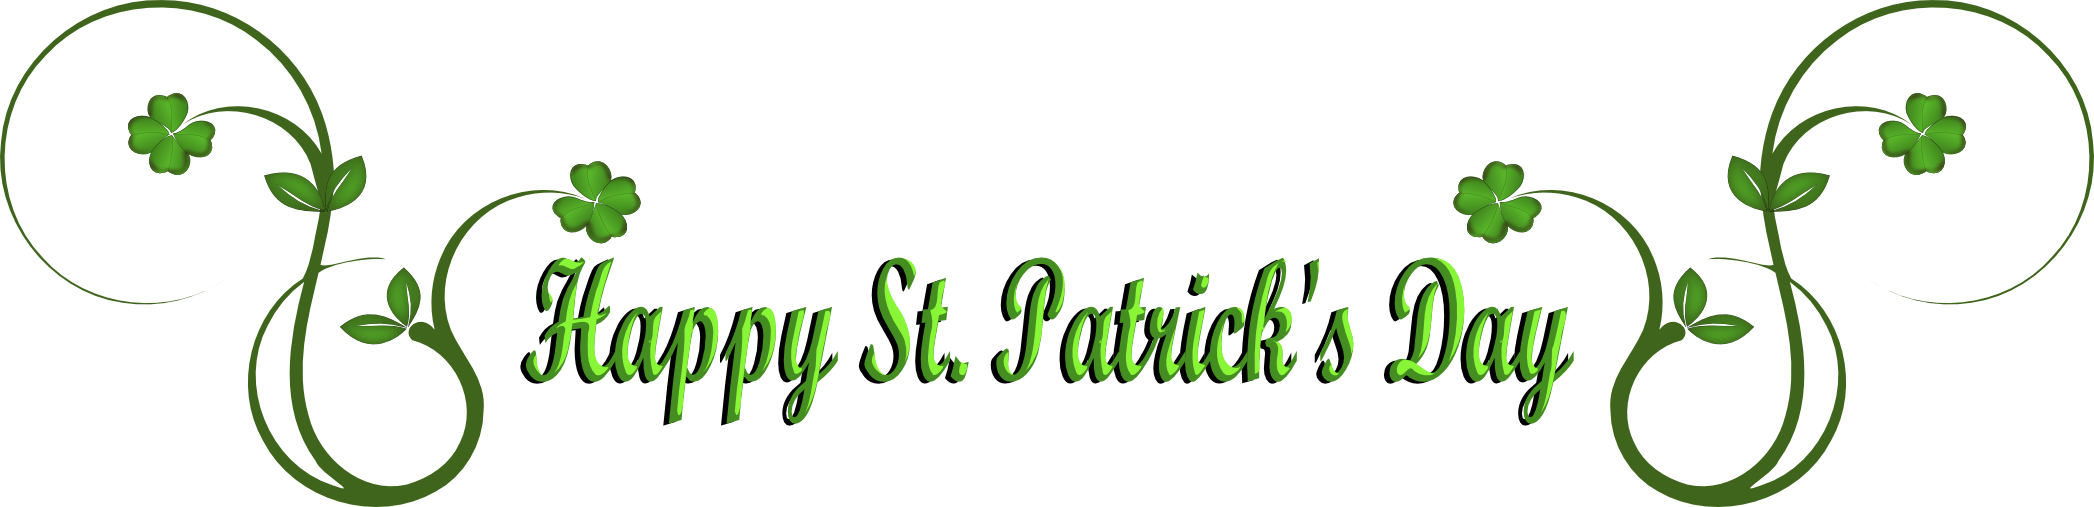 Saint Patrick's Day PNG Transparent Image